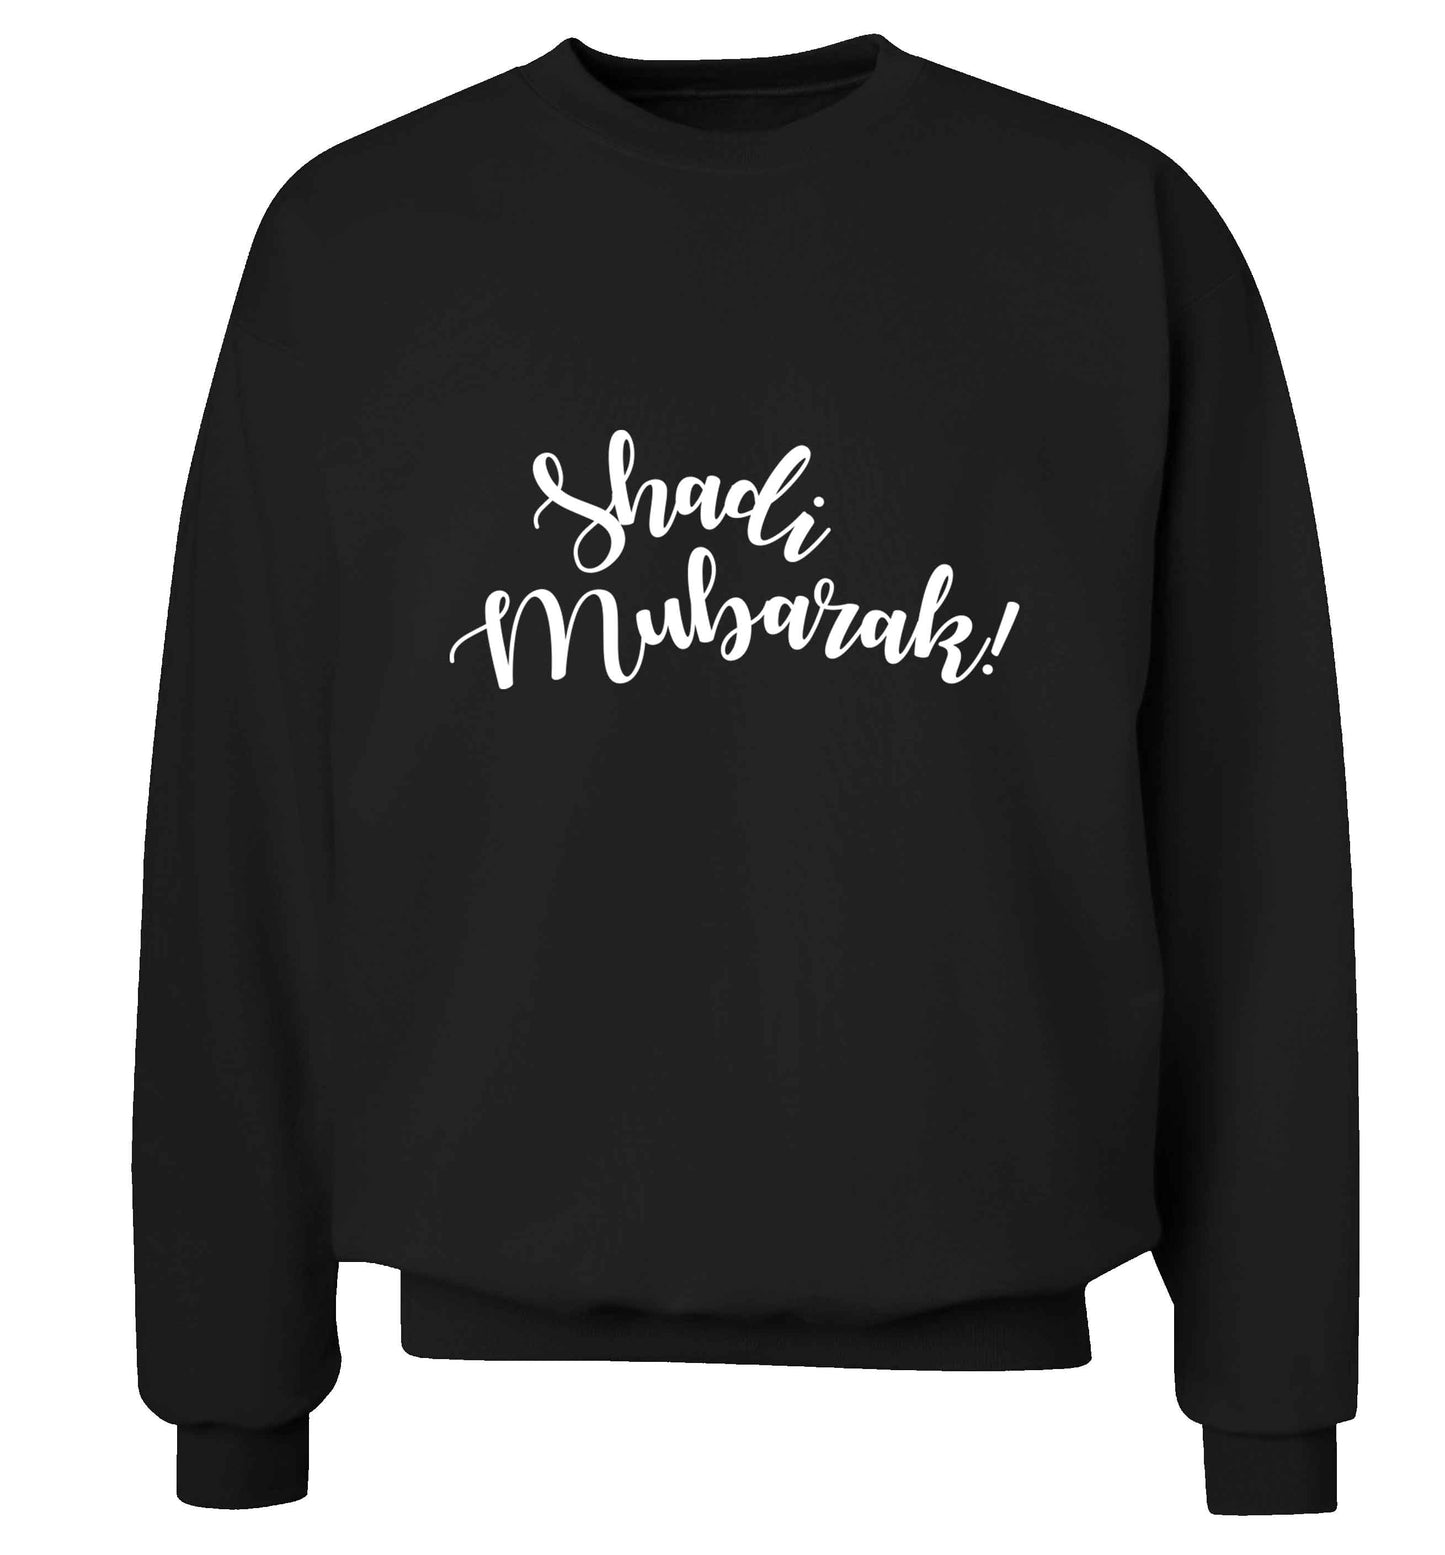 Shadi mubarak adult's unisex black sweater 2XL